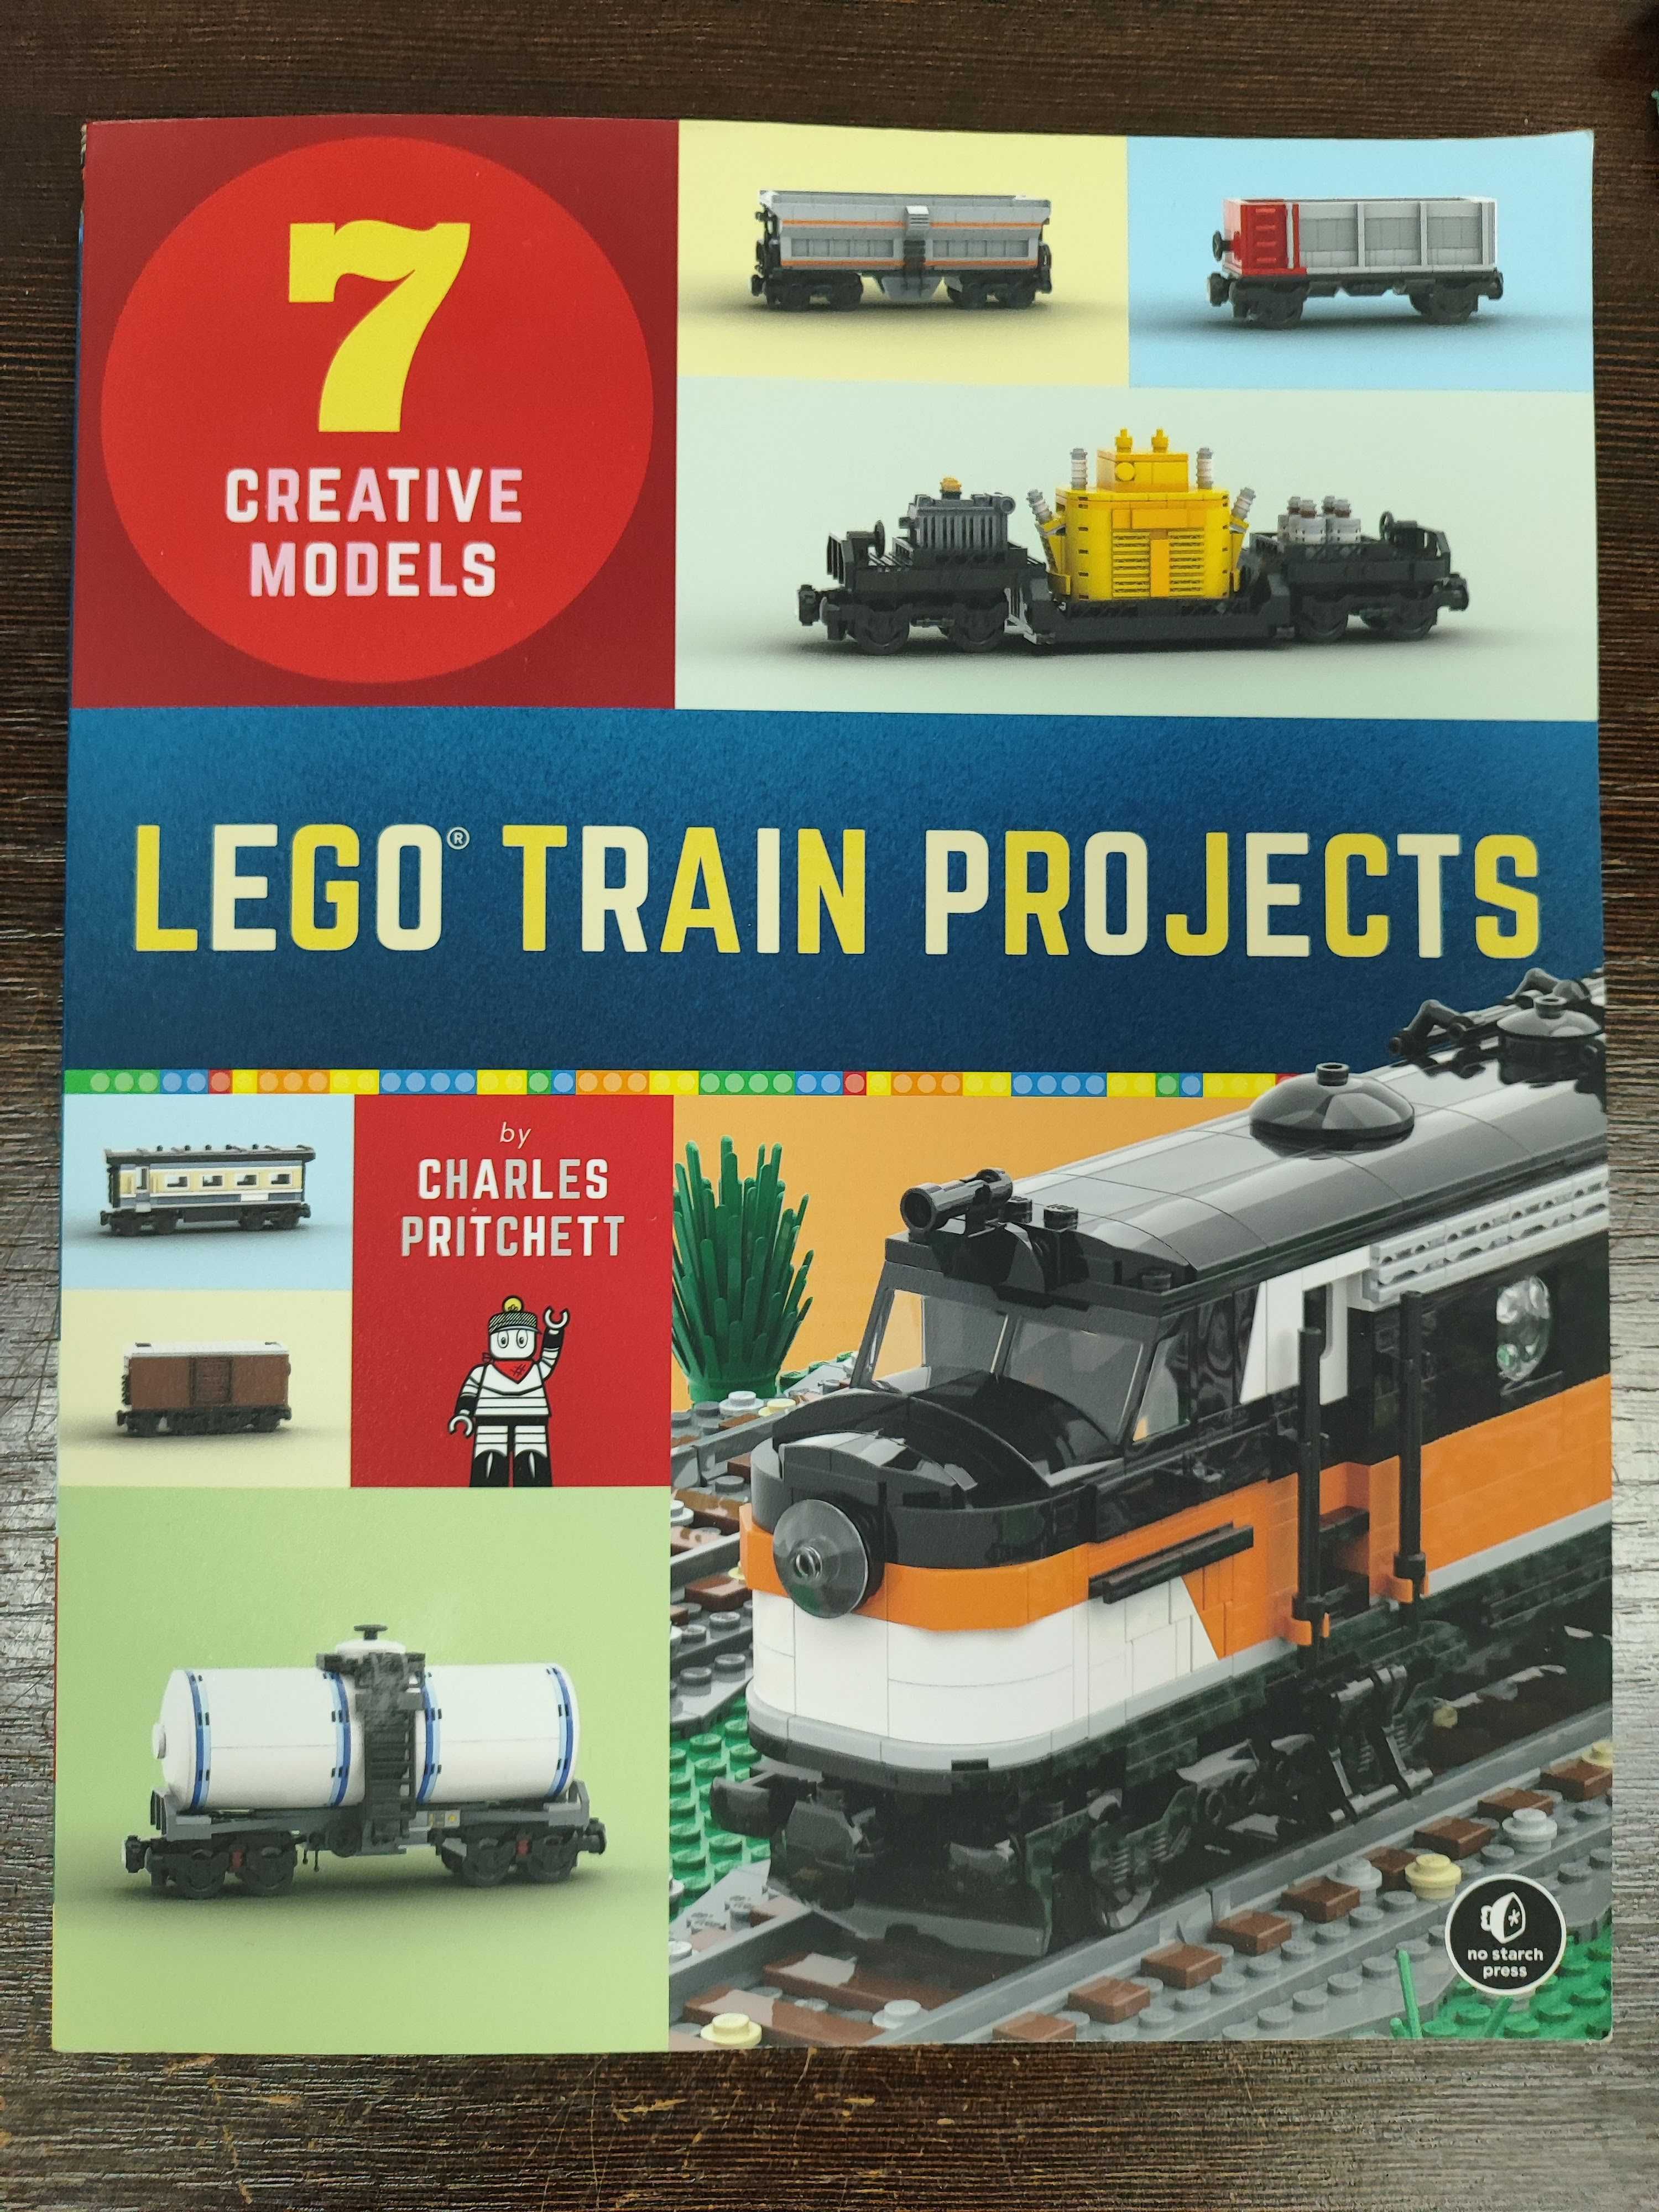 Lego Train Projects: 7 Creative Models